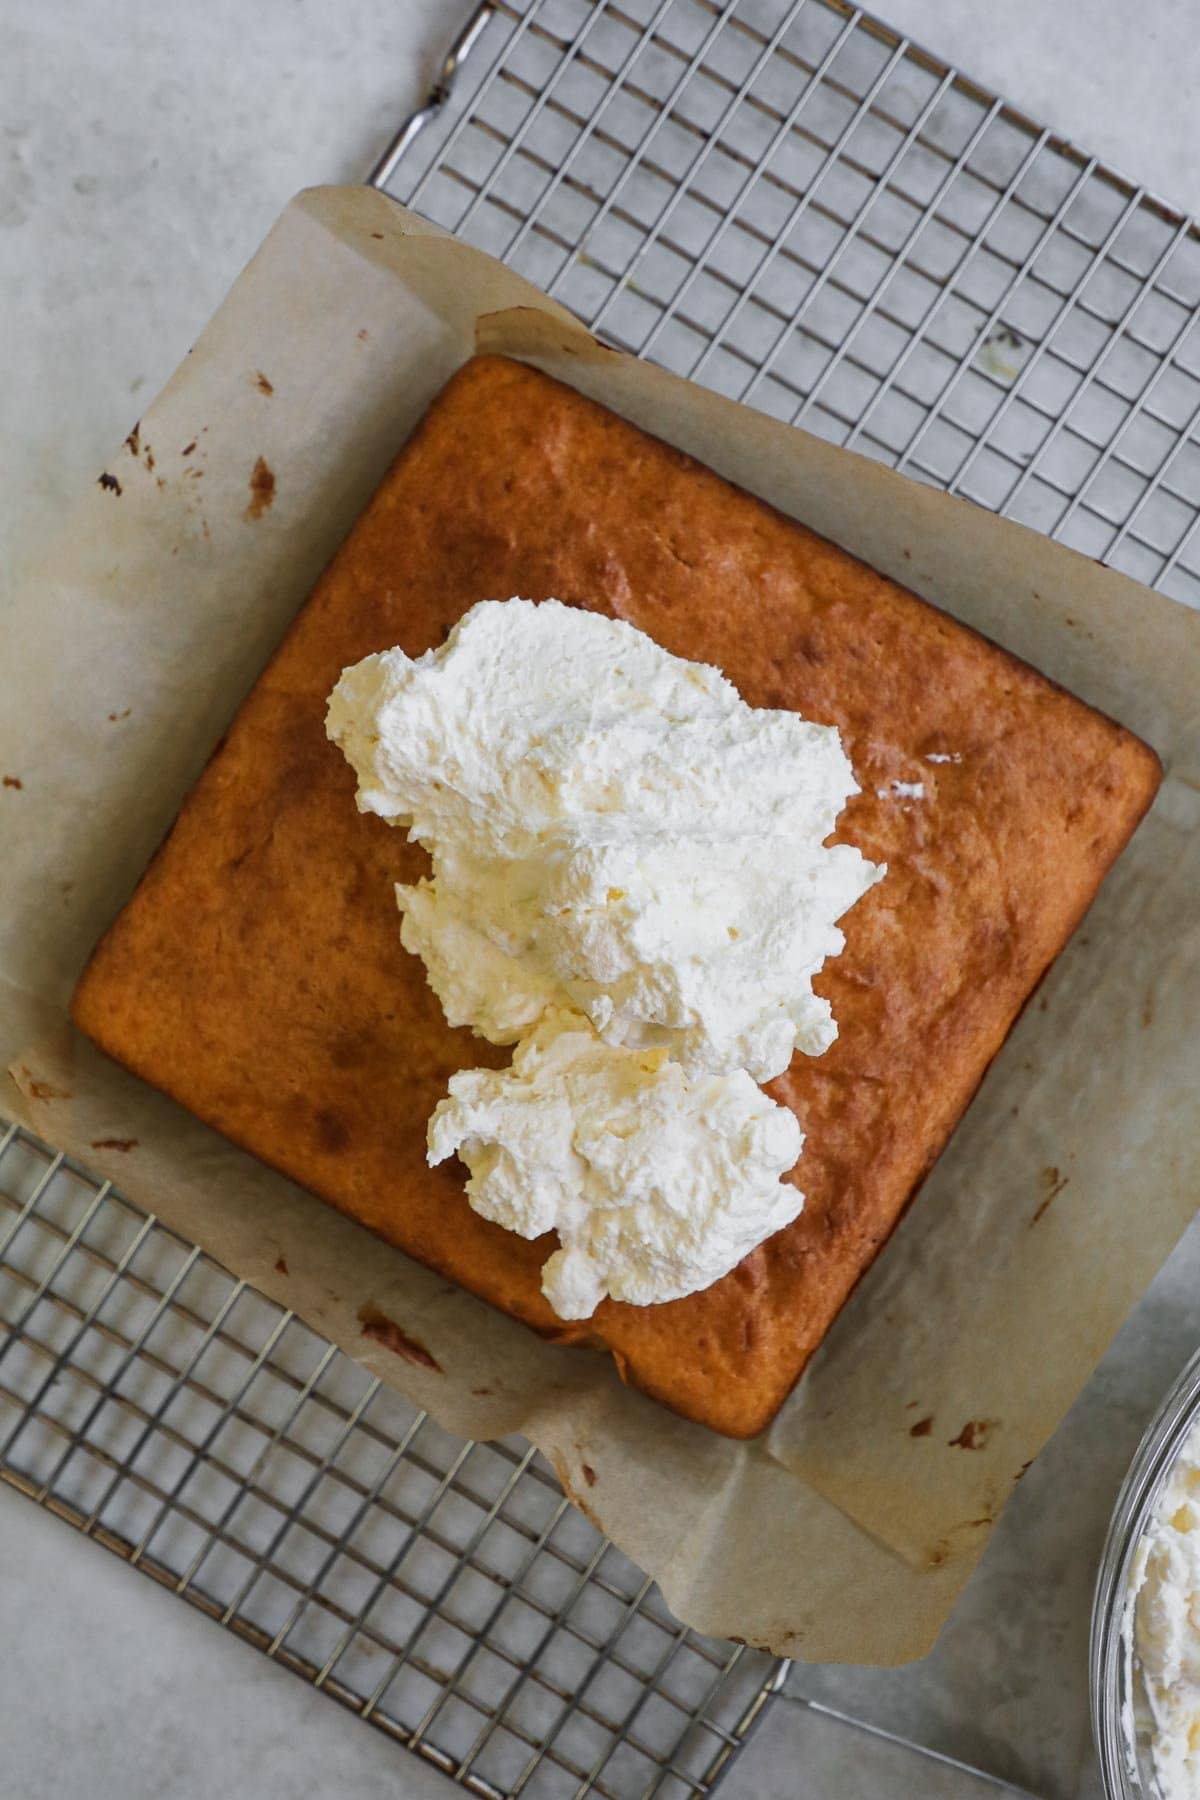 Vanilla mascarpone frosting on a cake.